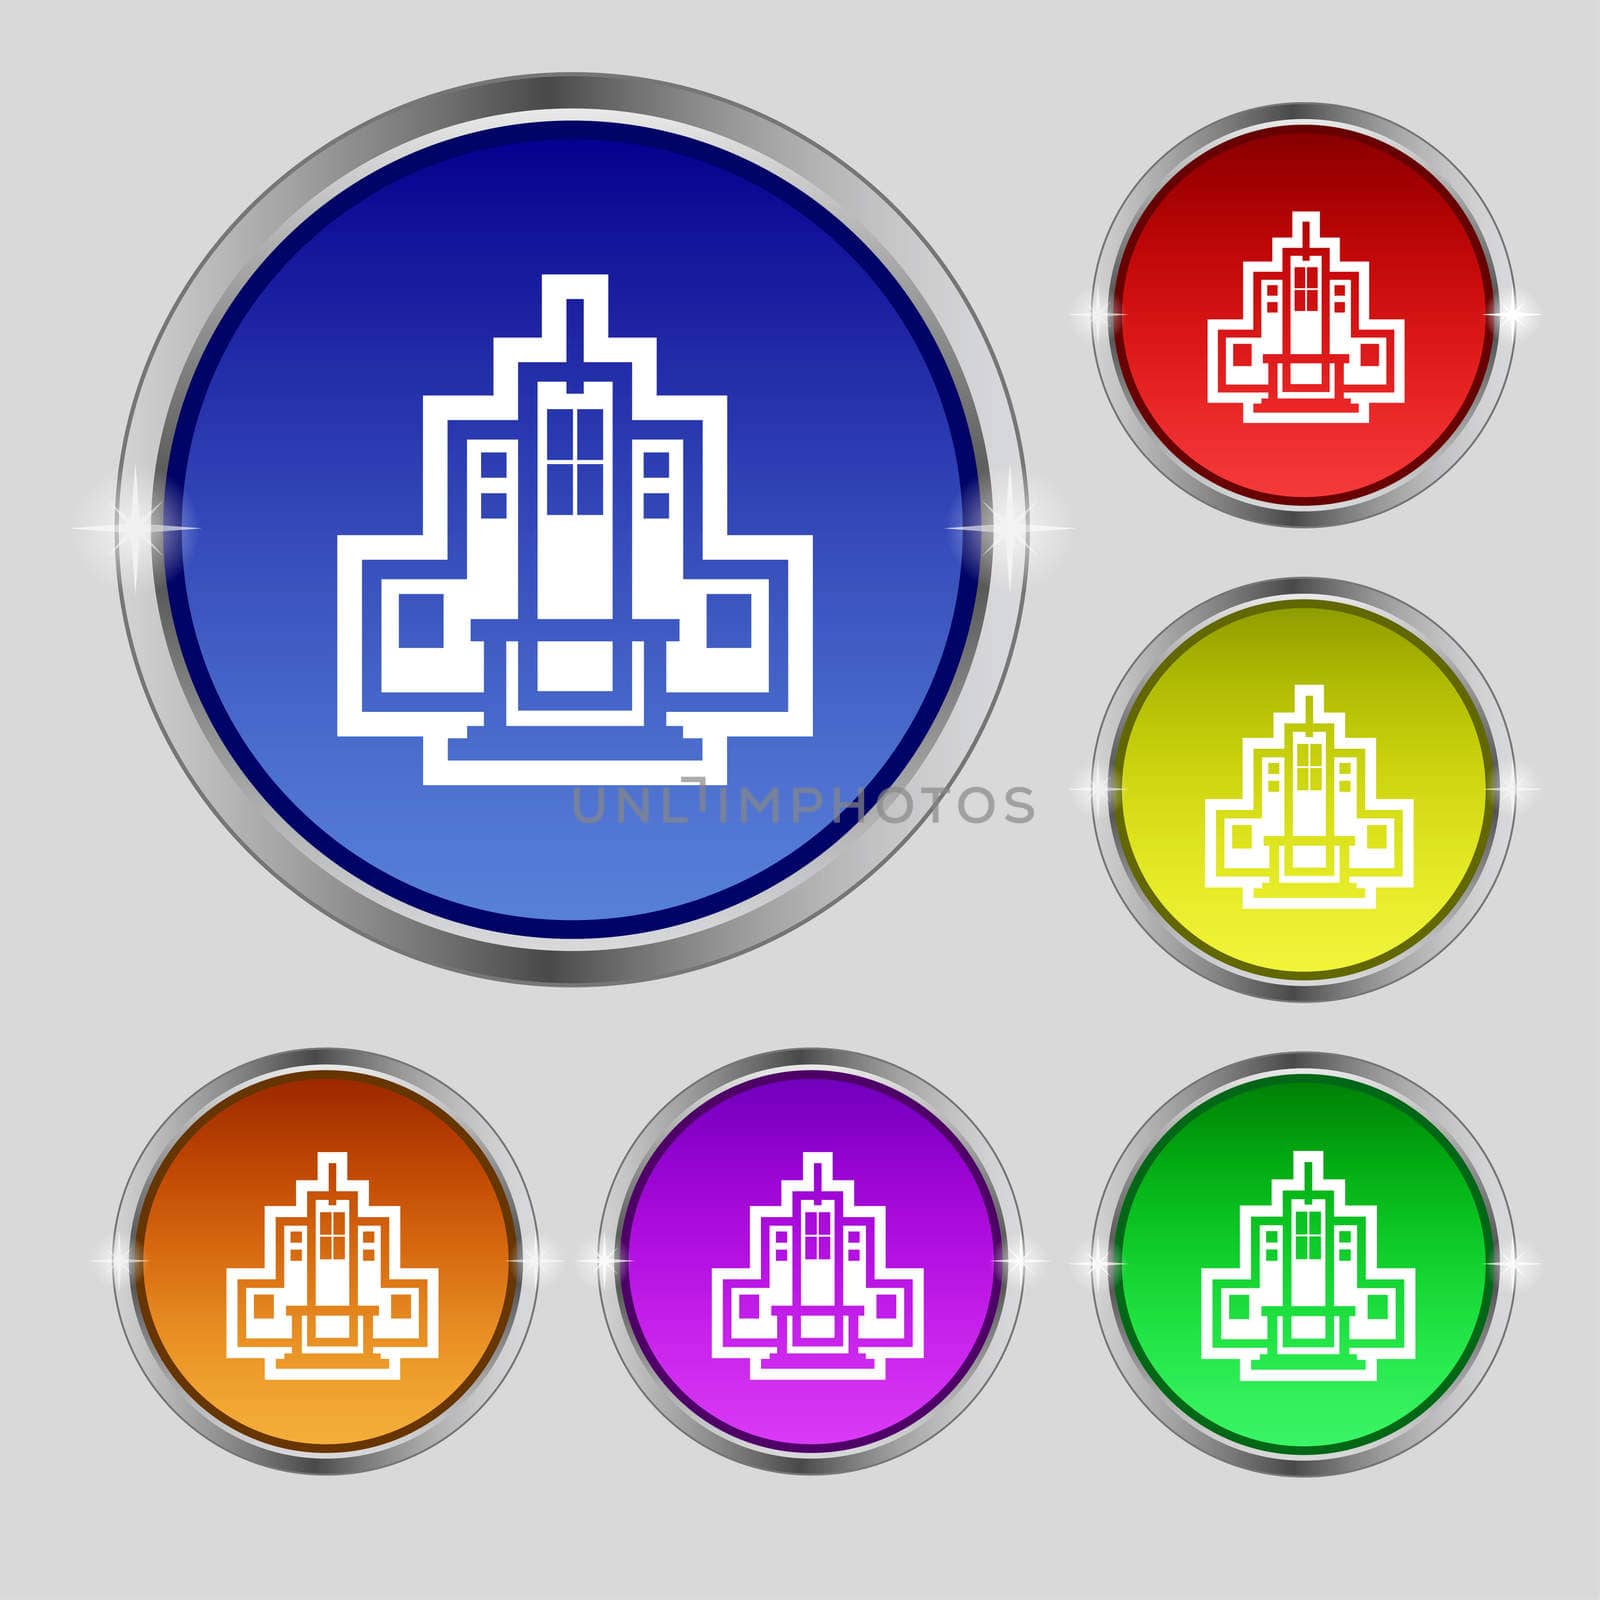 skyscraper icon sign. Round symbol on bright colourful buttons. illustration